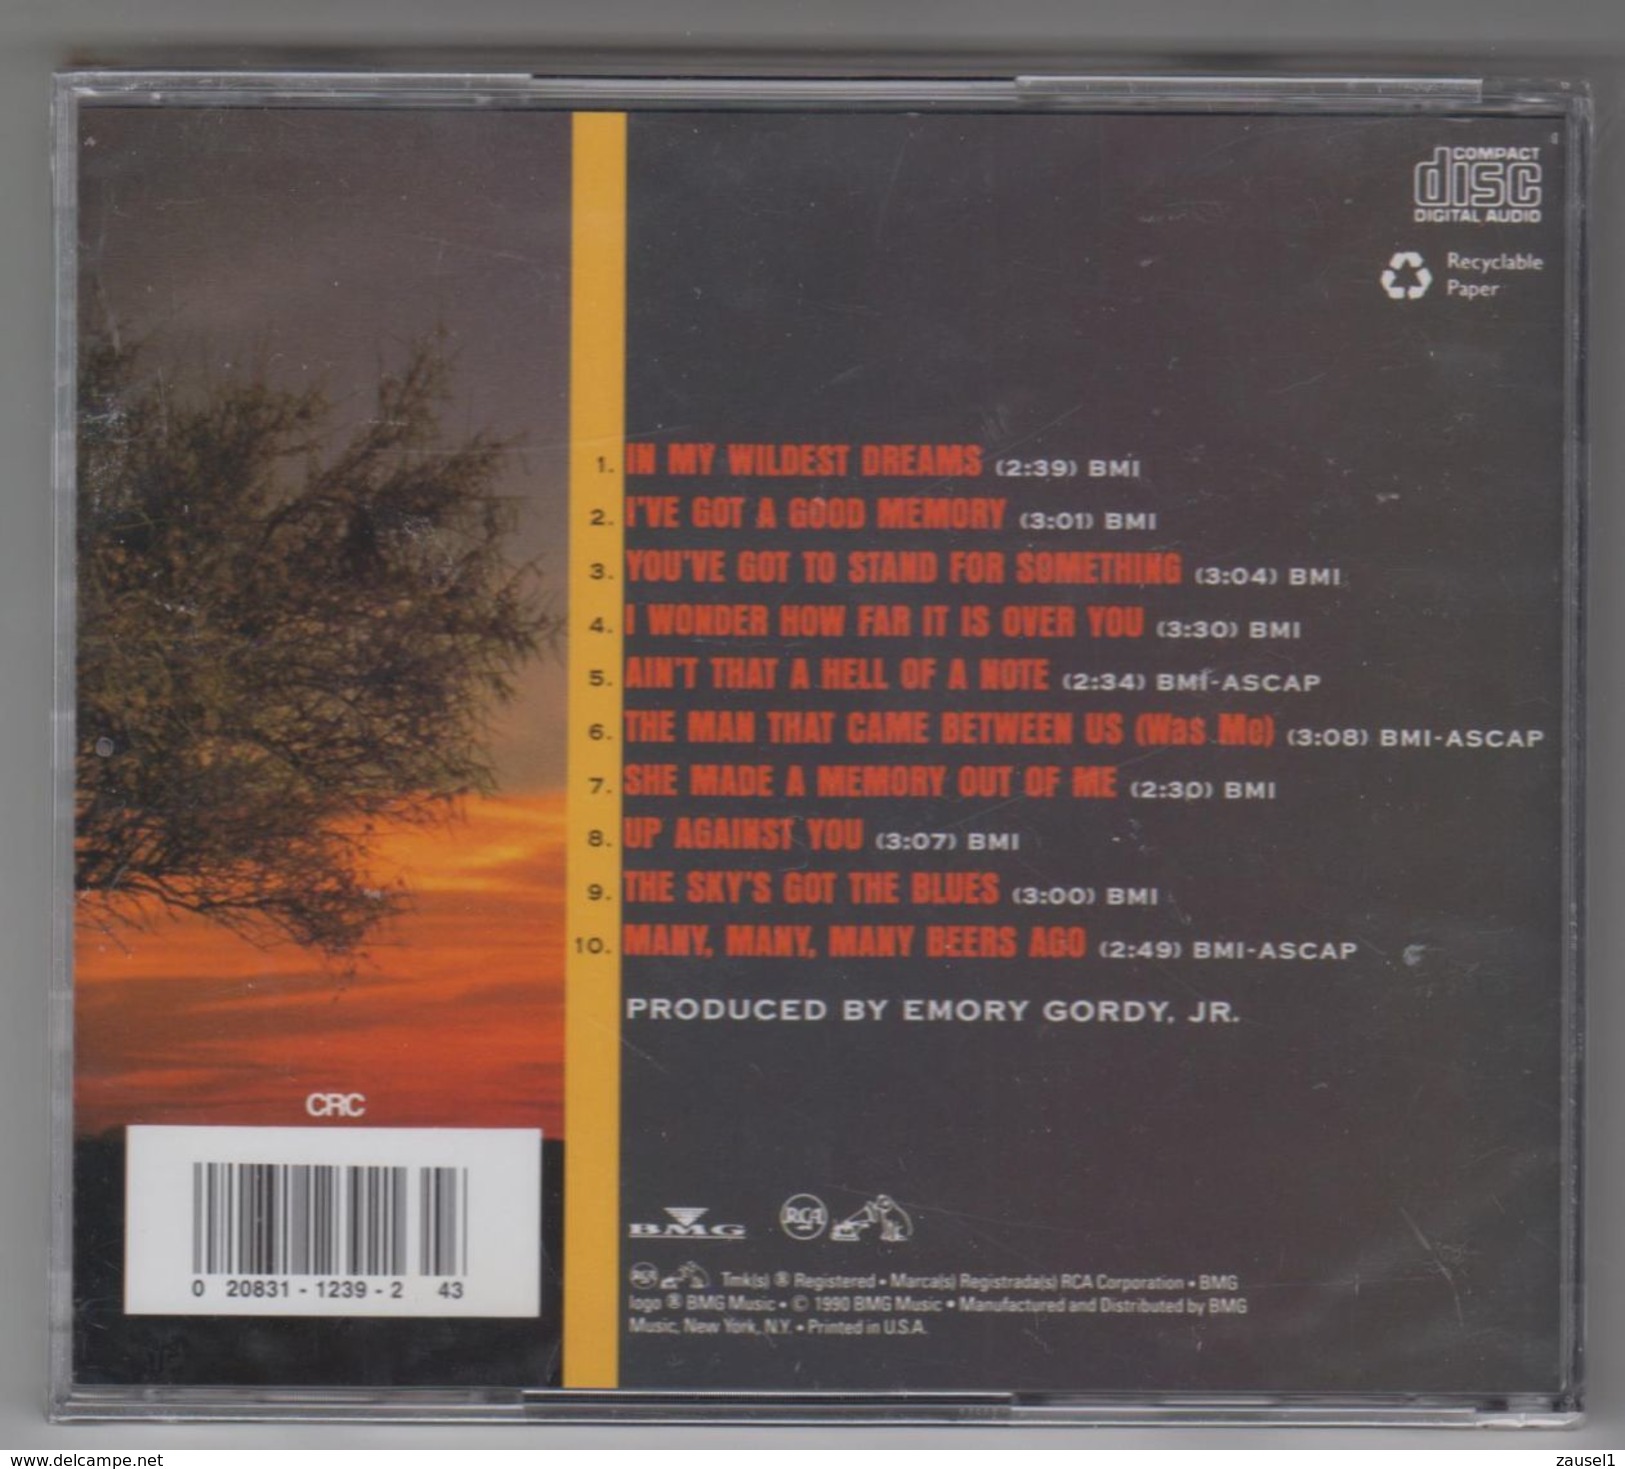 AAron Tippin - You've Got To Stand For Something - Original CD NEU (eingeschweißt) - Country & Folk